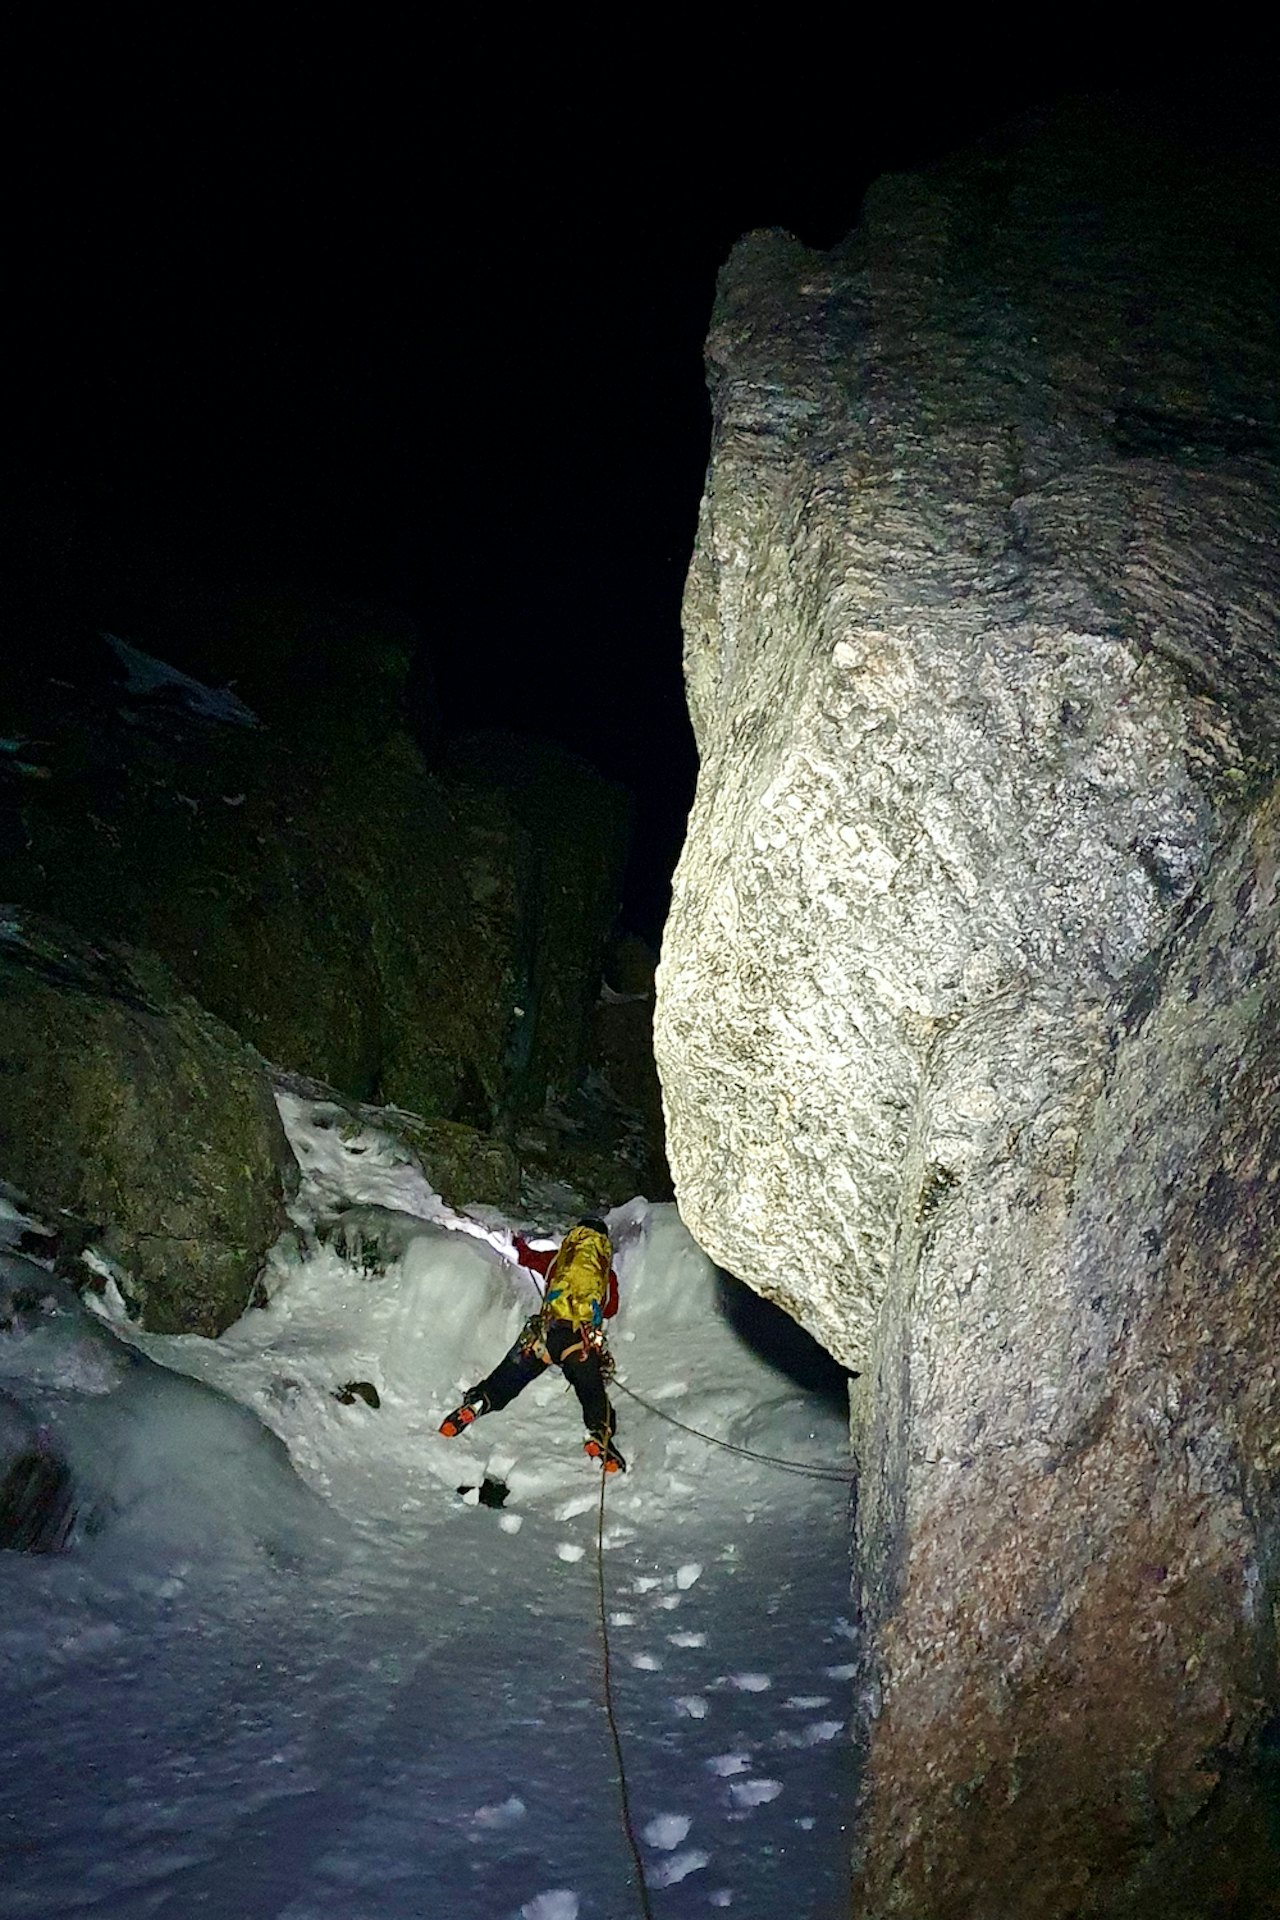 Alpin klatring etter mørkets frembrudd